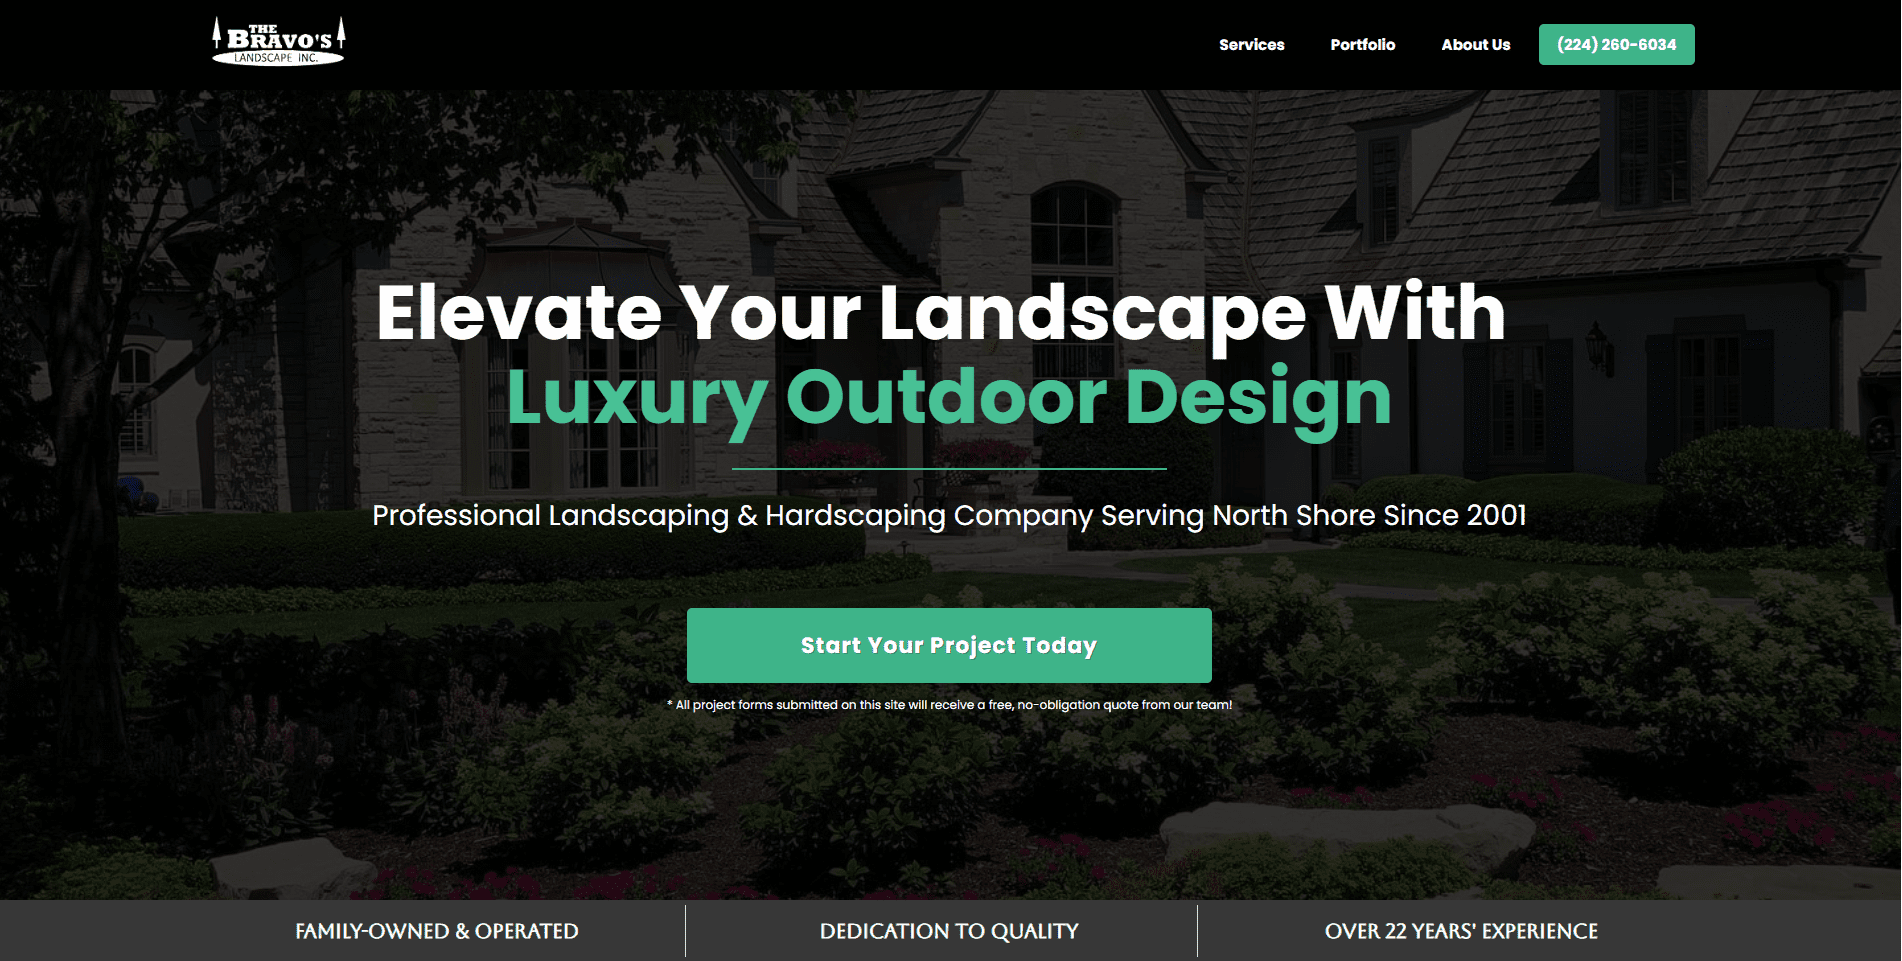 Strategic visibility Website Design Services - Recent Project - The Bravos Landscape, Landscaping and Hardscape Design Company